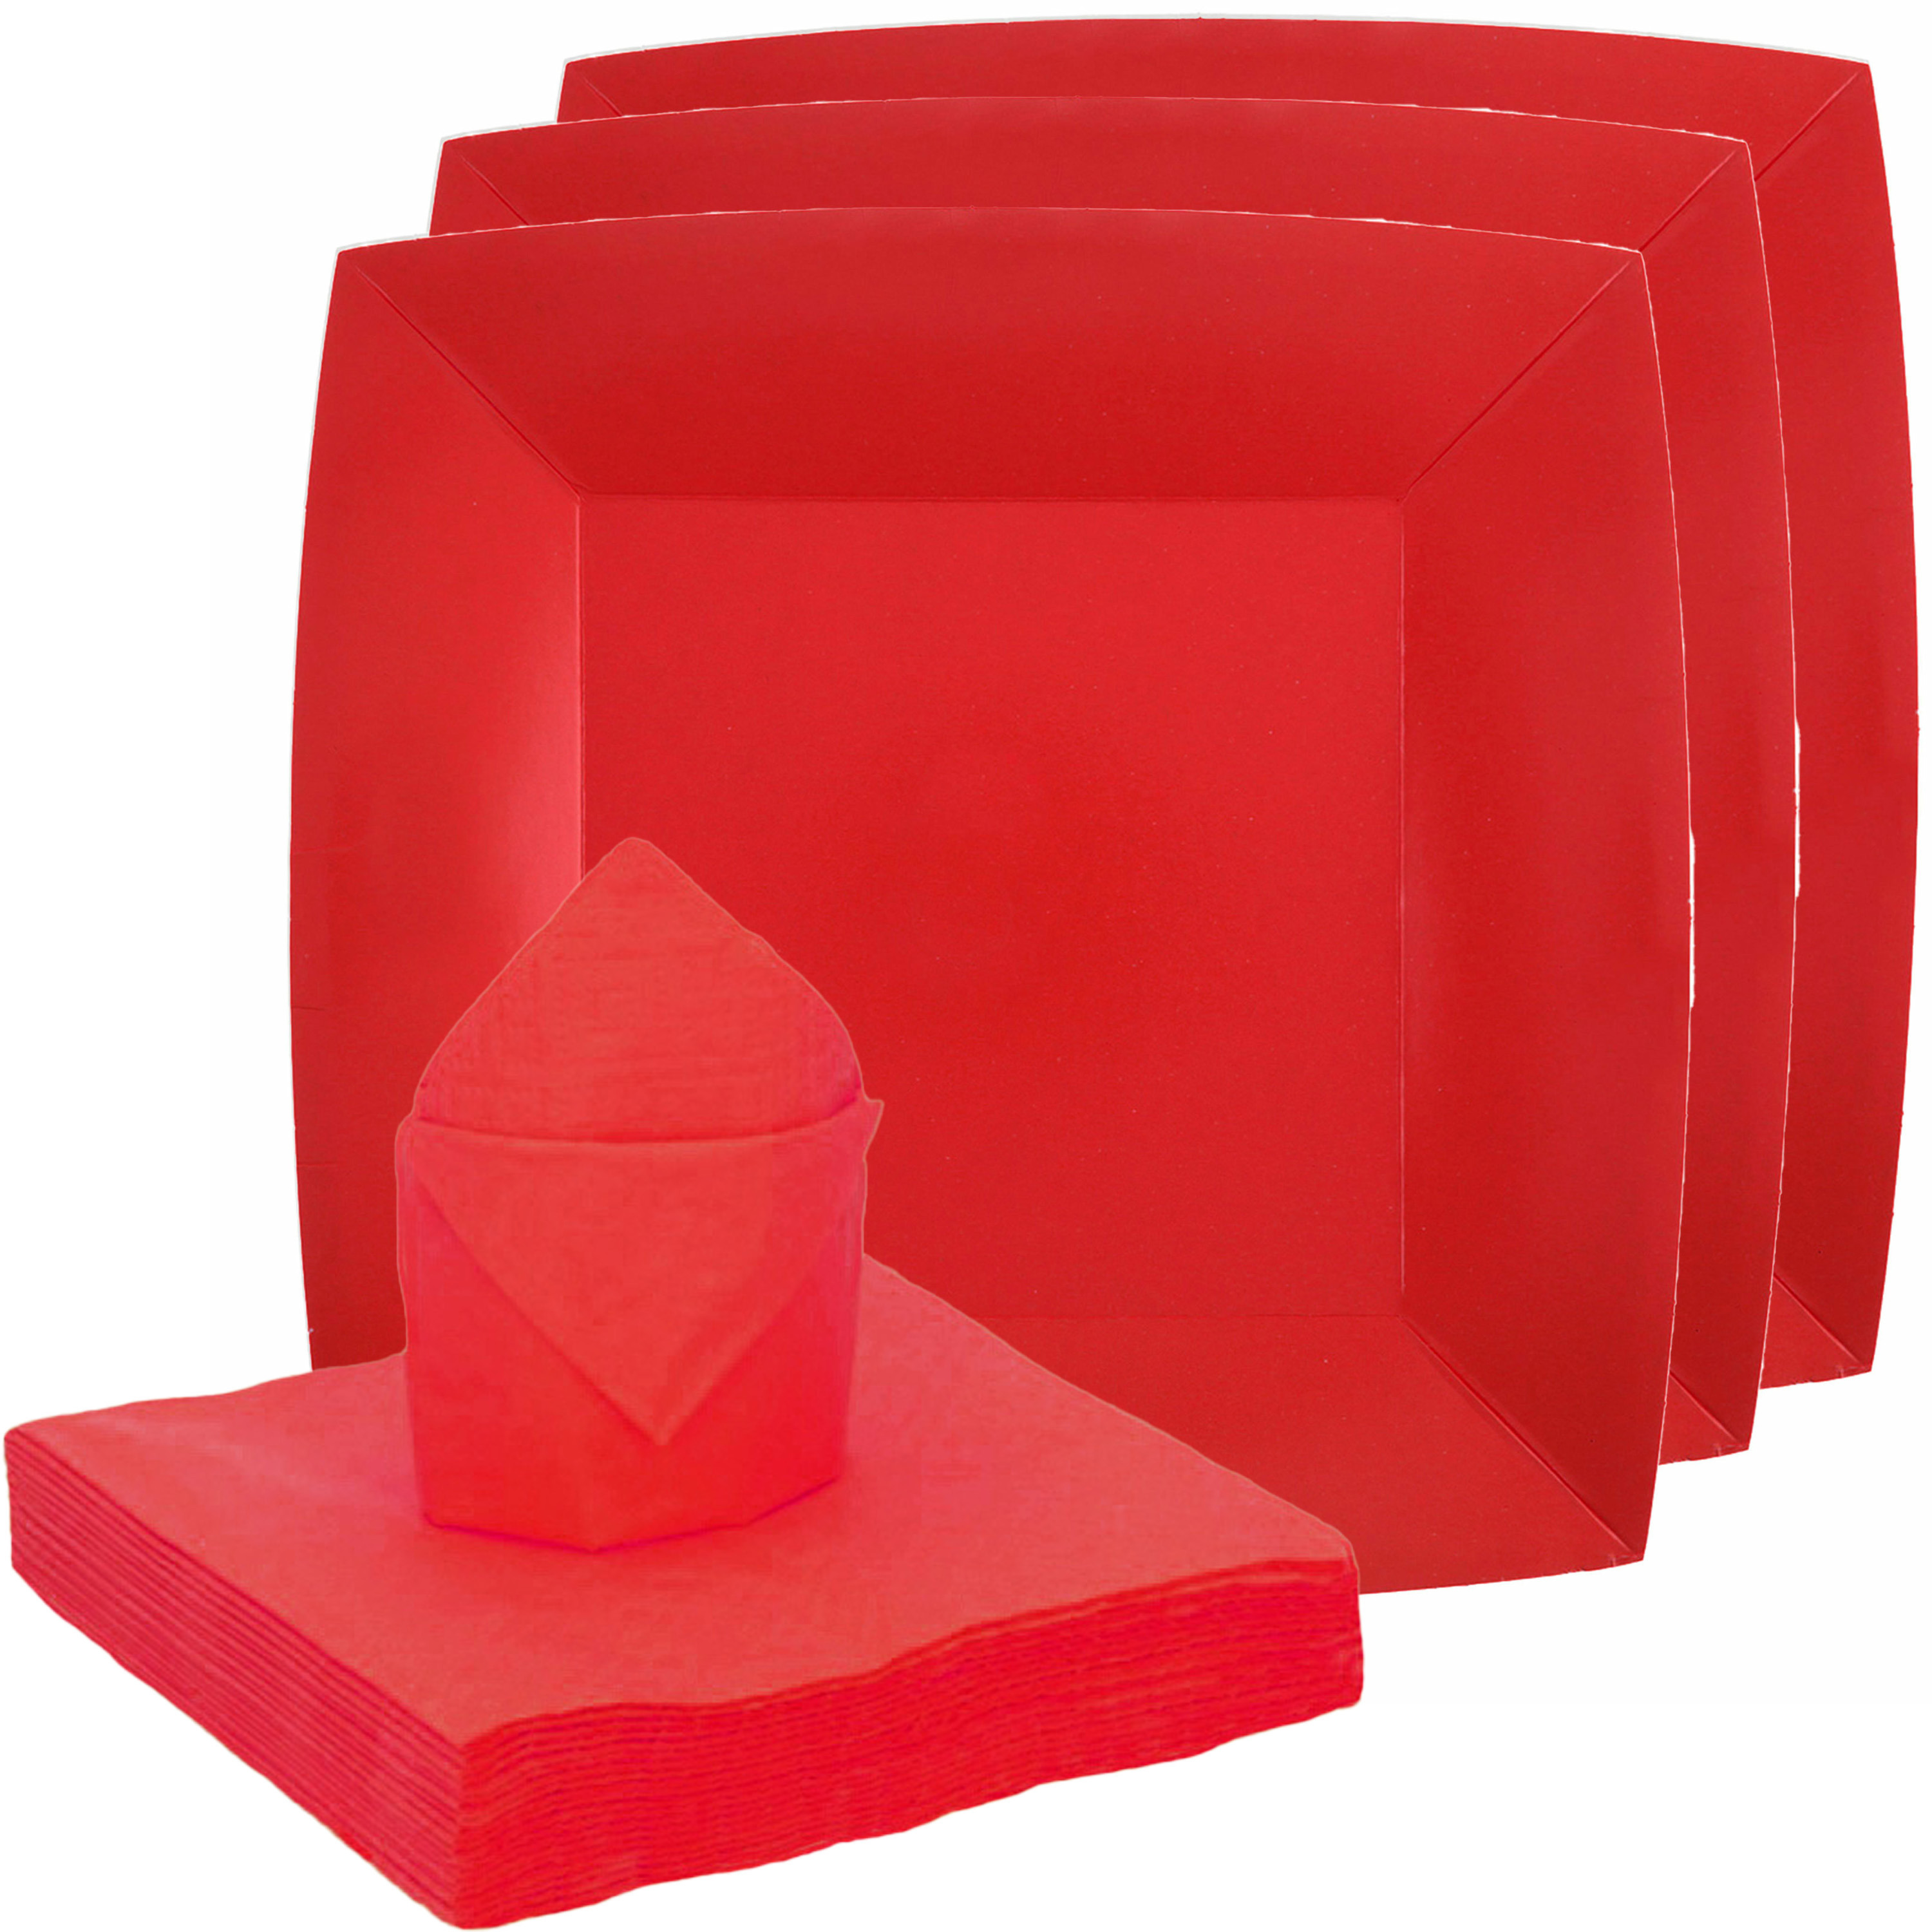 Feest-verjaardag servies set 20x bordjes-25x servetten rood karton